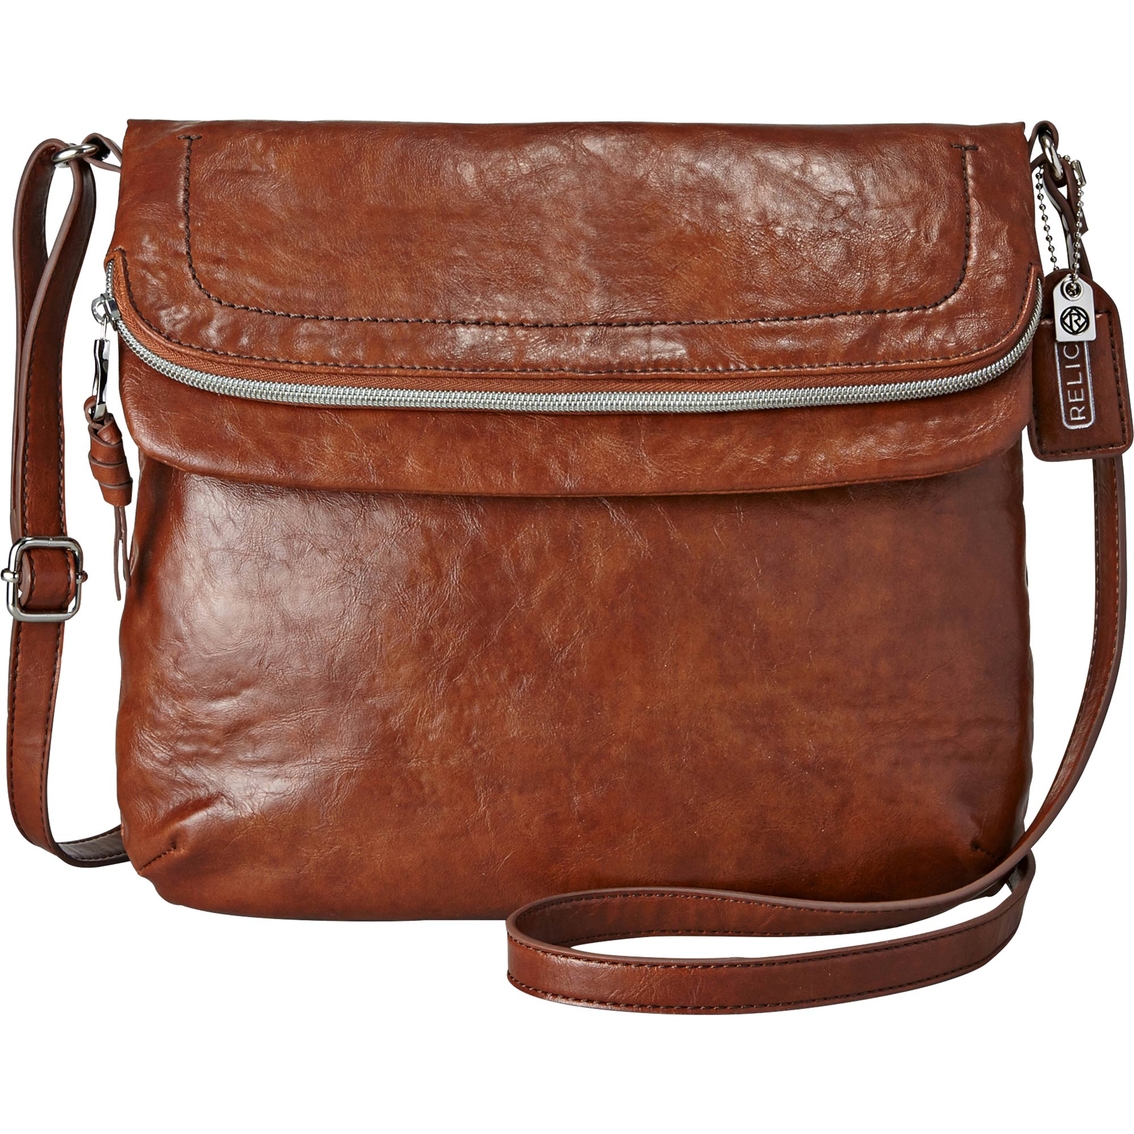 Relic Cora Crossbody Bag | Crossbody Bags | Handbags & Accessories ...